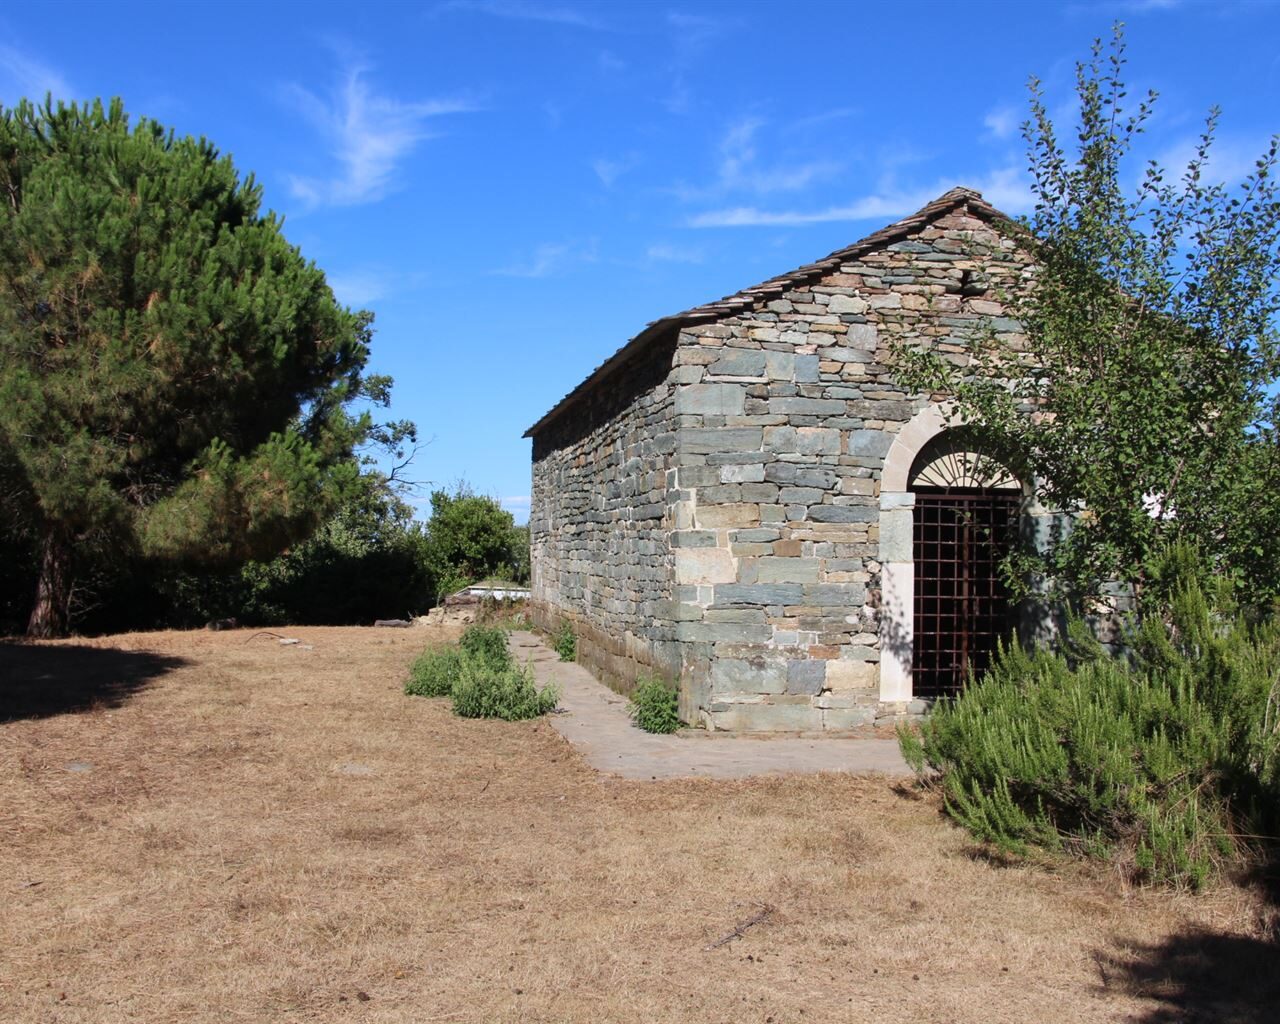 10 La chapelle San Martino